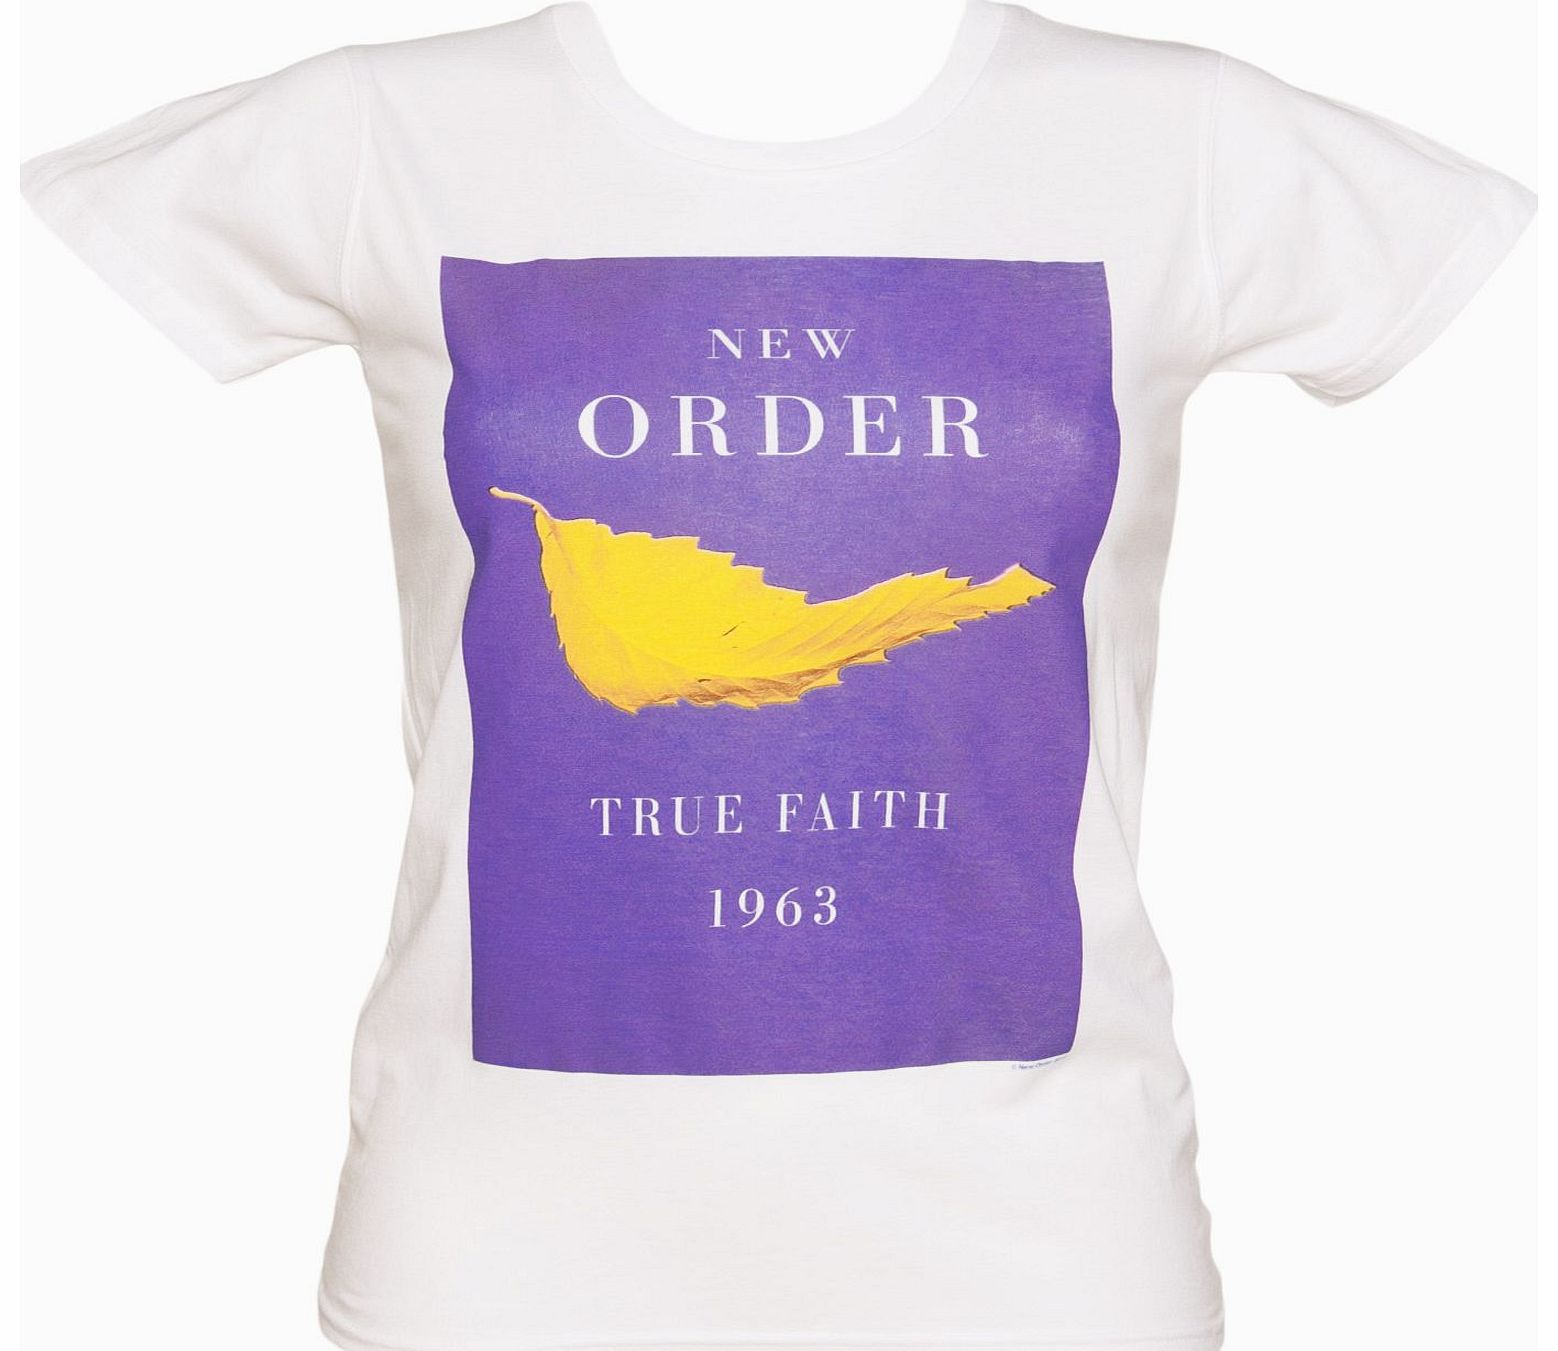 Fanpac Ladies White New Order True Faith T-Shirt from